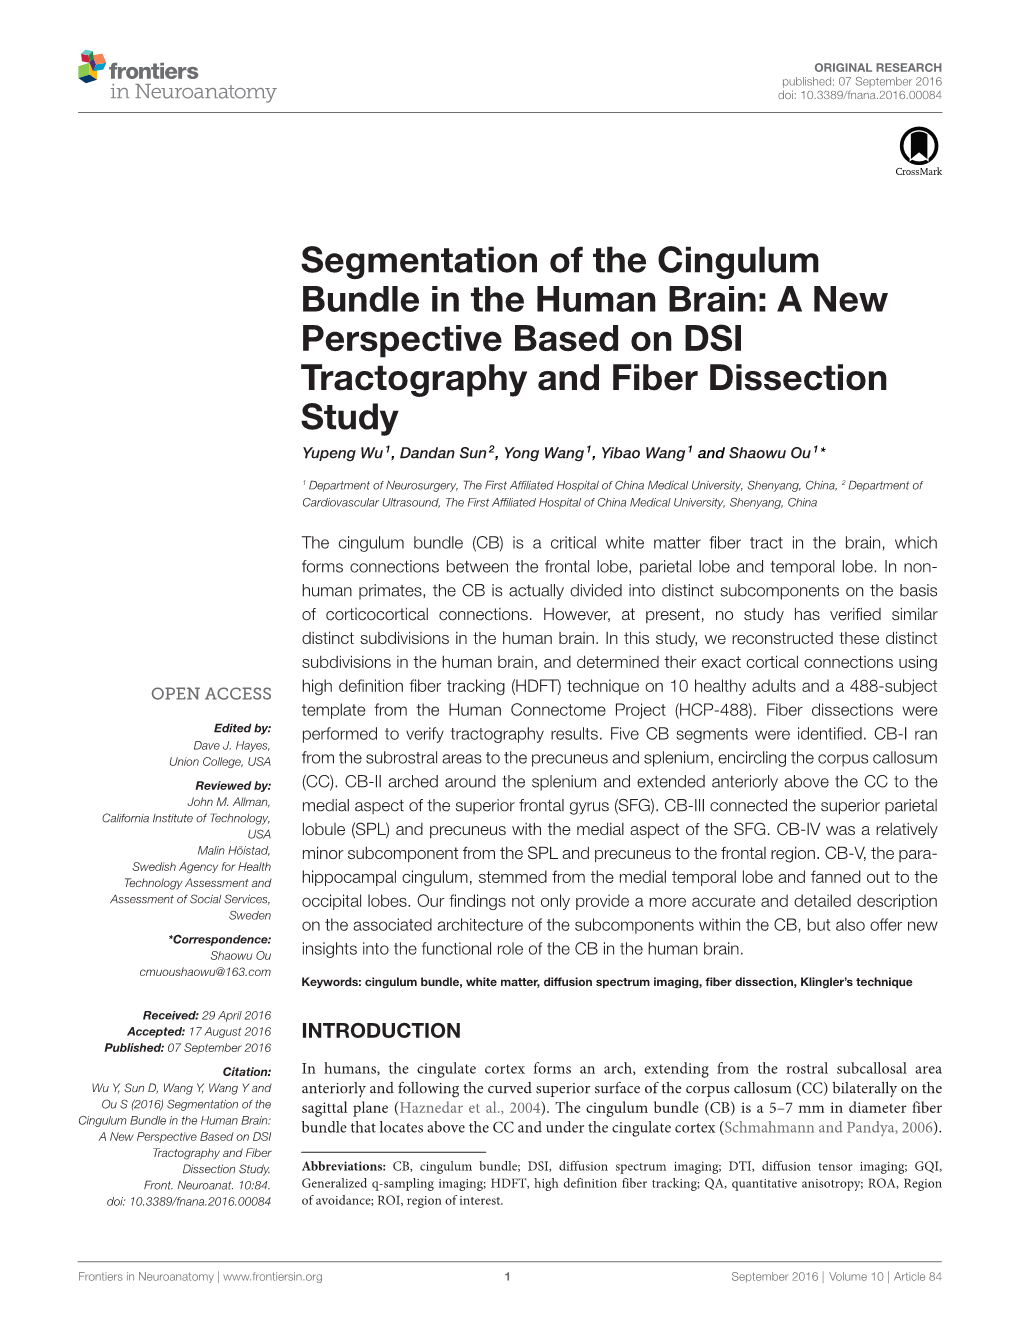 Segmentation of the Cingulum Bundle in the Human Brain